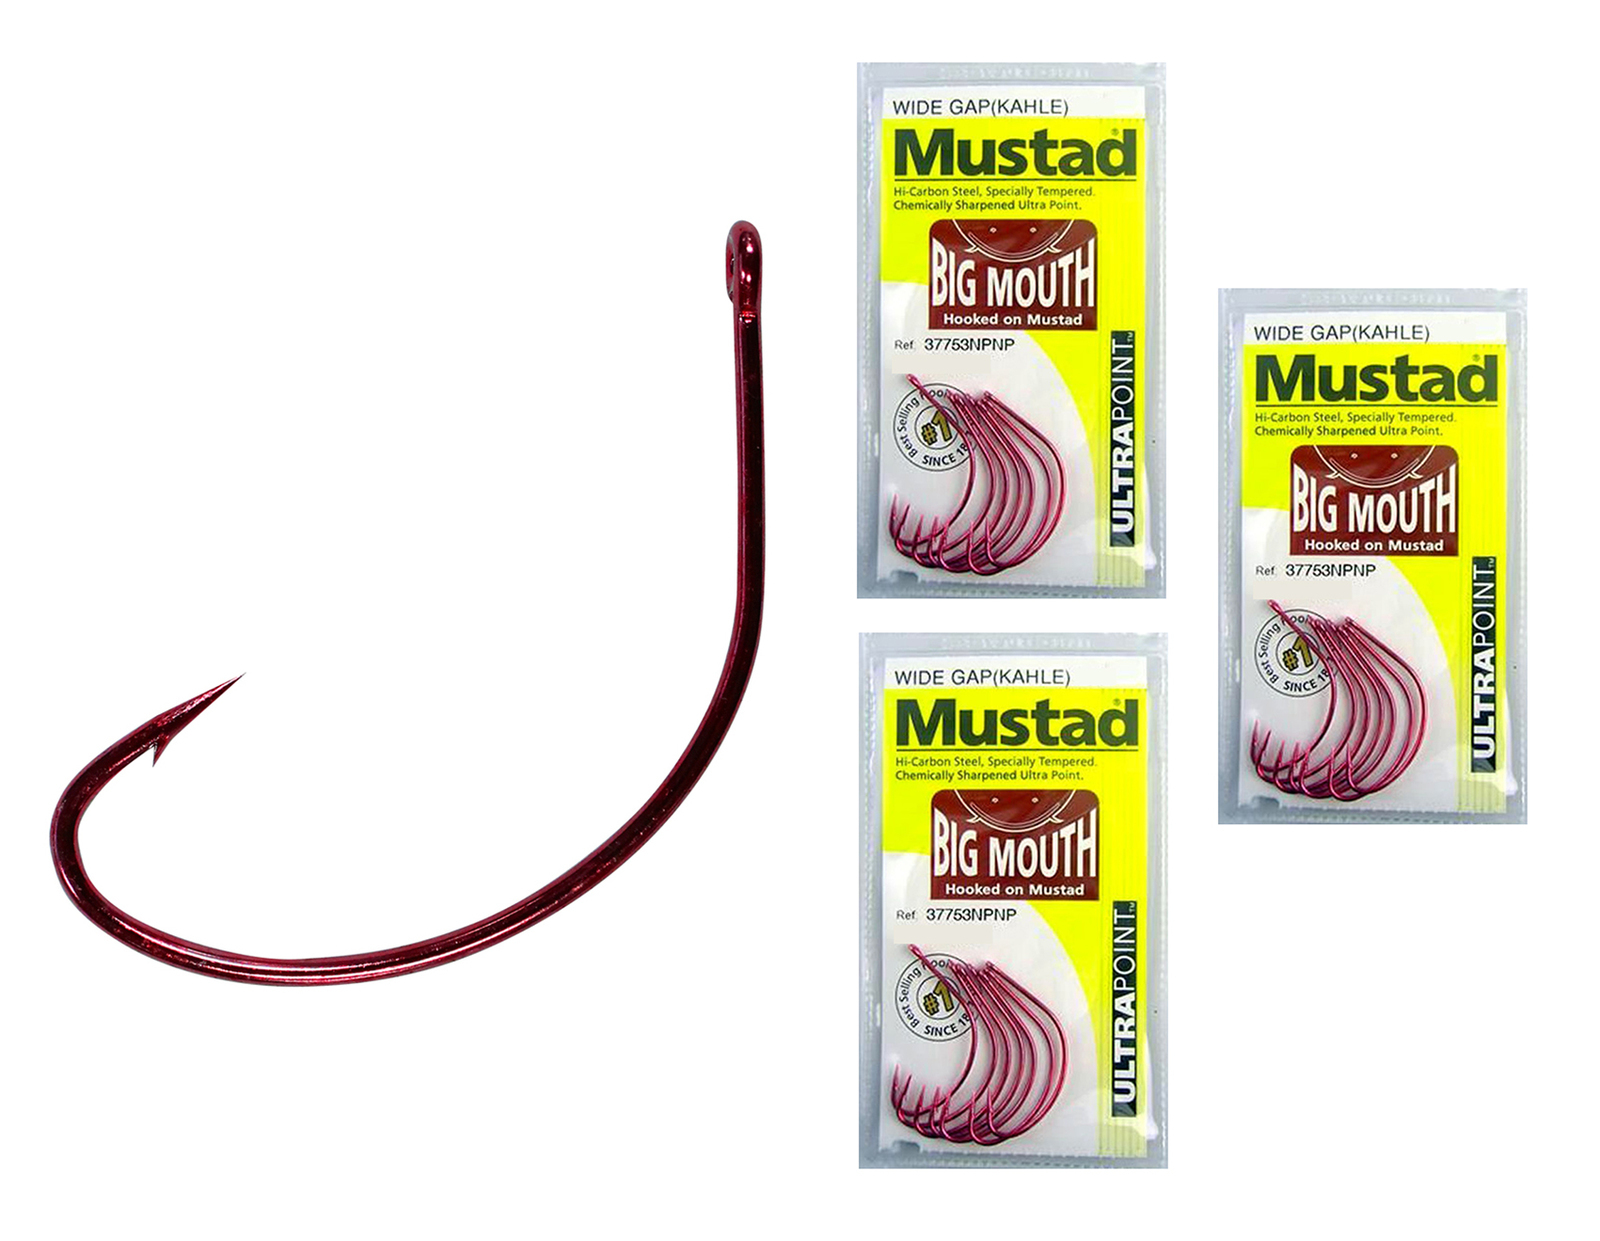 3 Packs of Mustad 37753NPNP Big Mouth Chemically Sharp Fishing Hooks